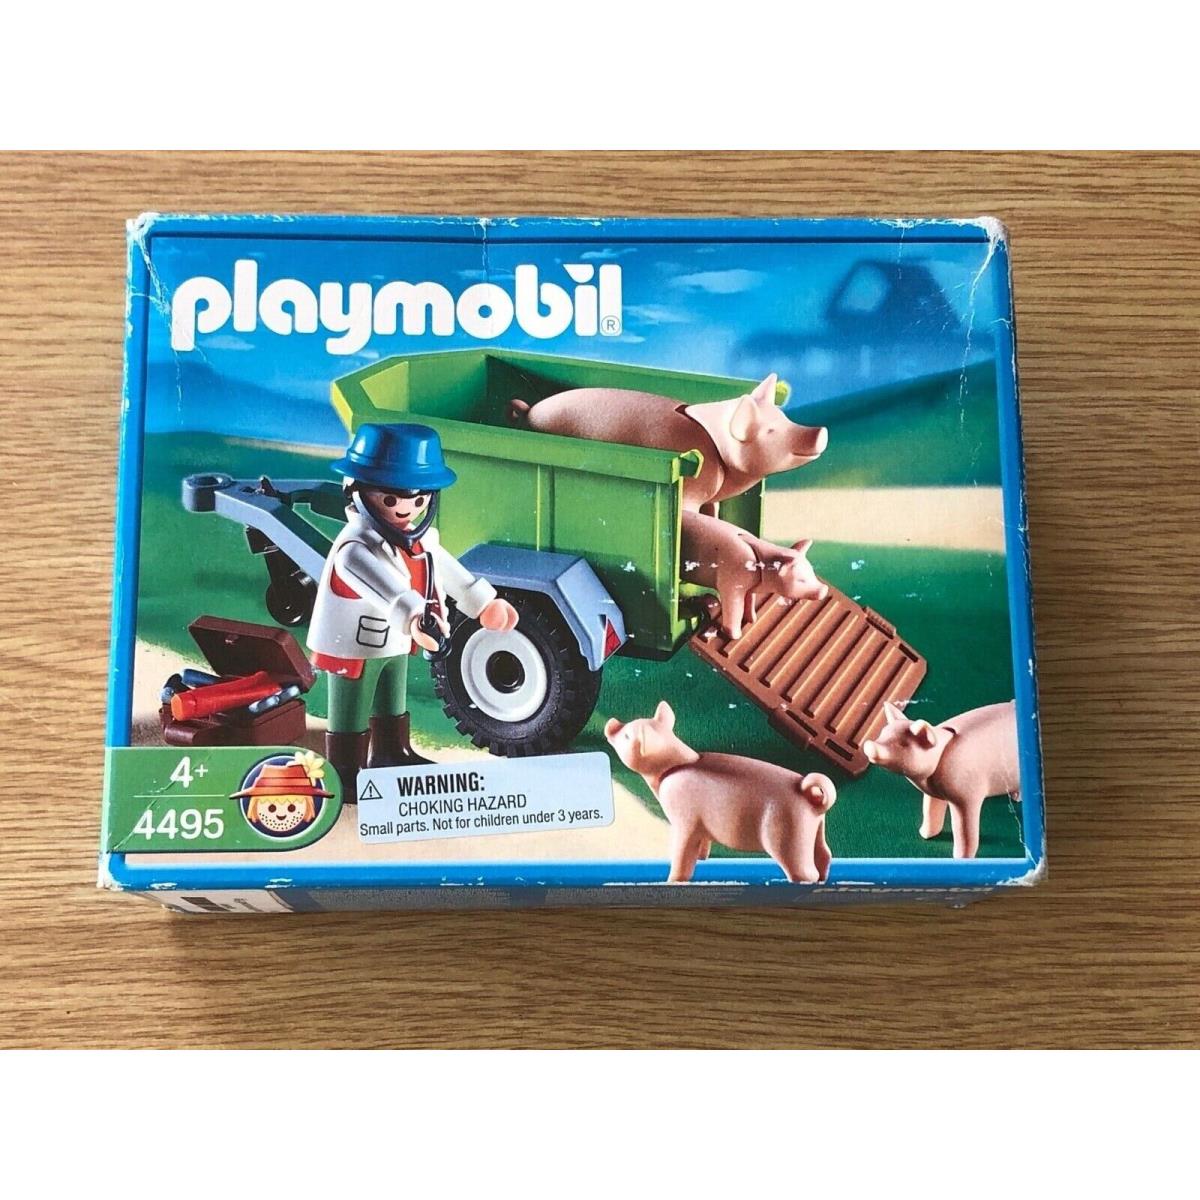 Playmobil 4495 Veterinarian with Pigs Set Farm Oop